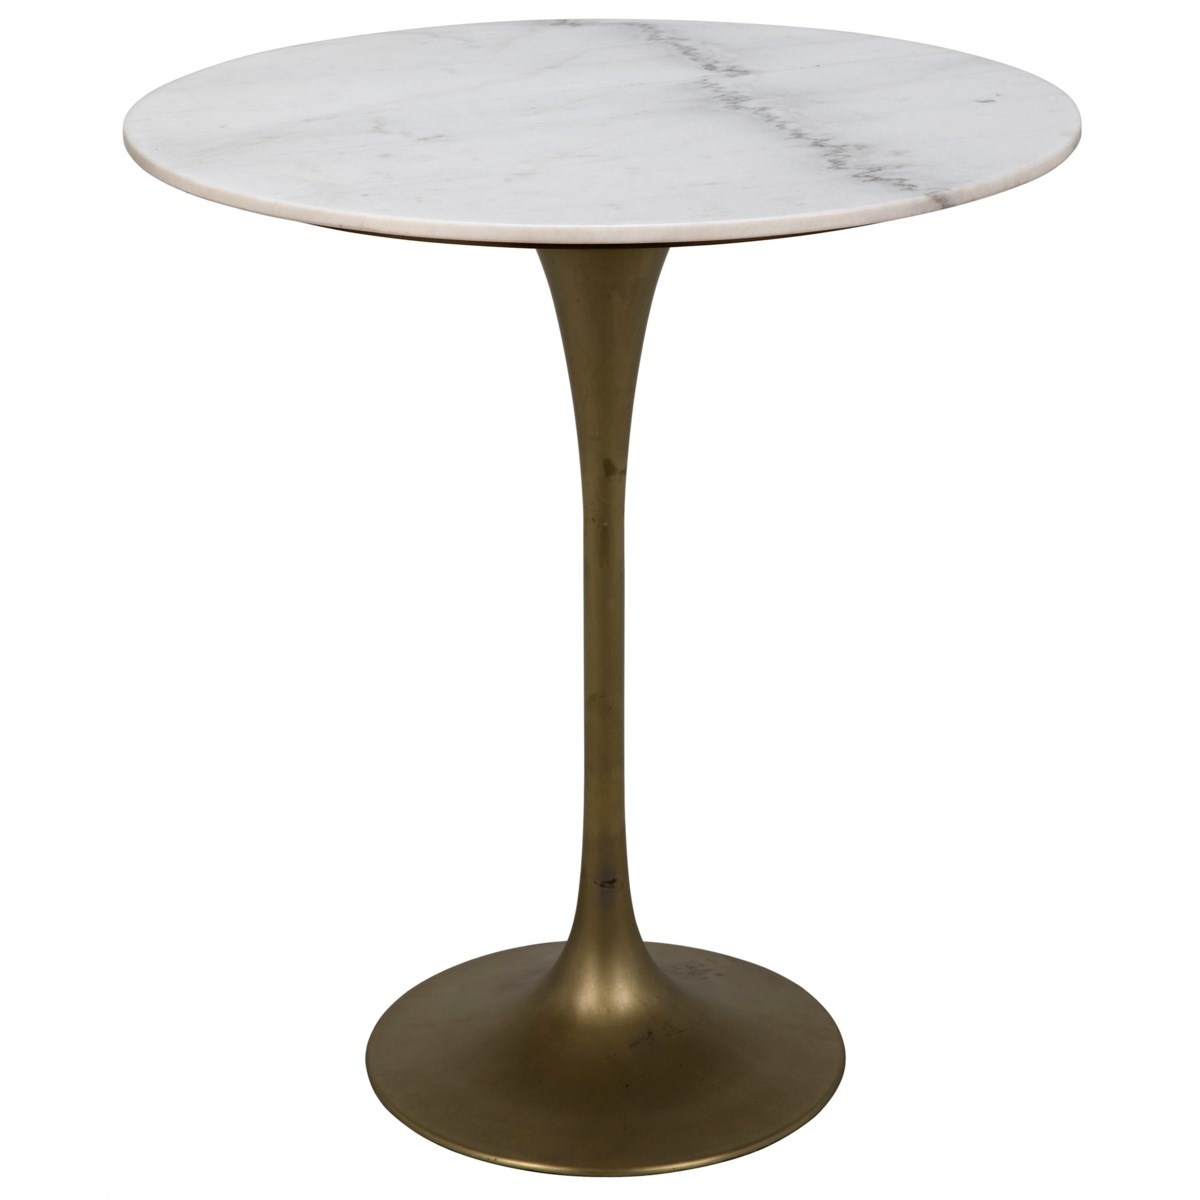 Laredo Table, 36", Antique Brass, White Marble Top